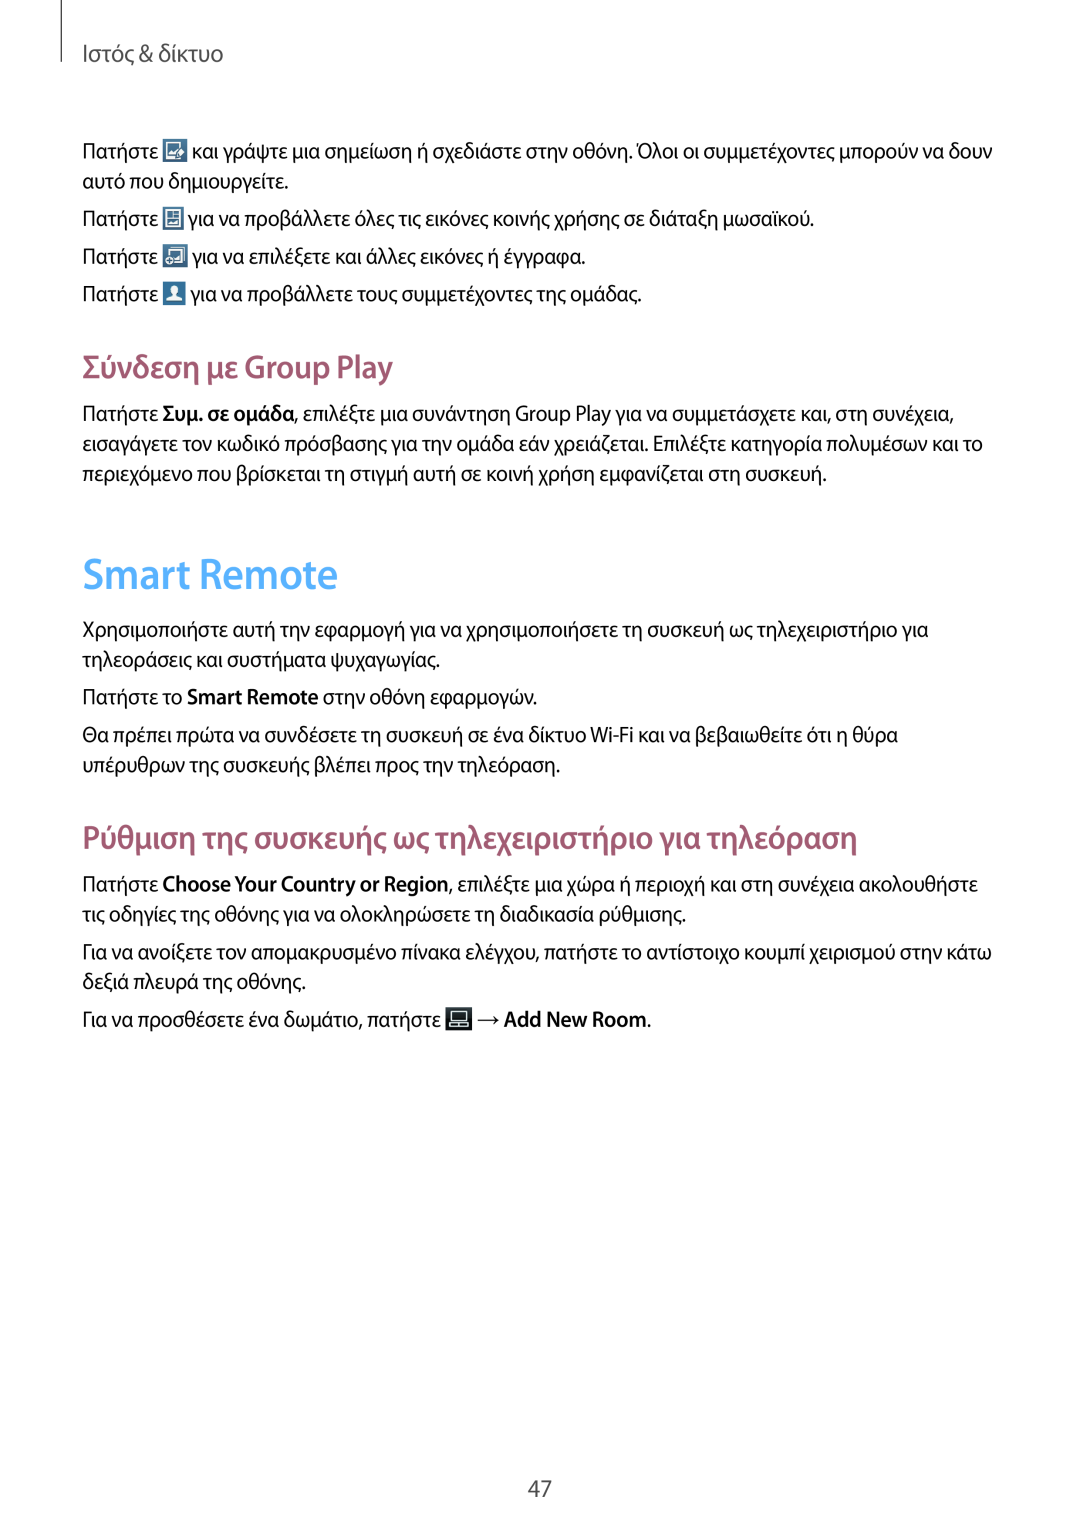 Samsung GT-P5210ZWAEUR manual Smart Remote, Σύνδεση με Group Play, Ρύθμιση της συσκευής ως τηλεχειριστήριο για τηλεόραση 